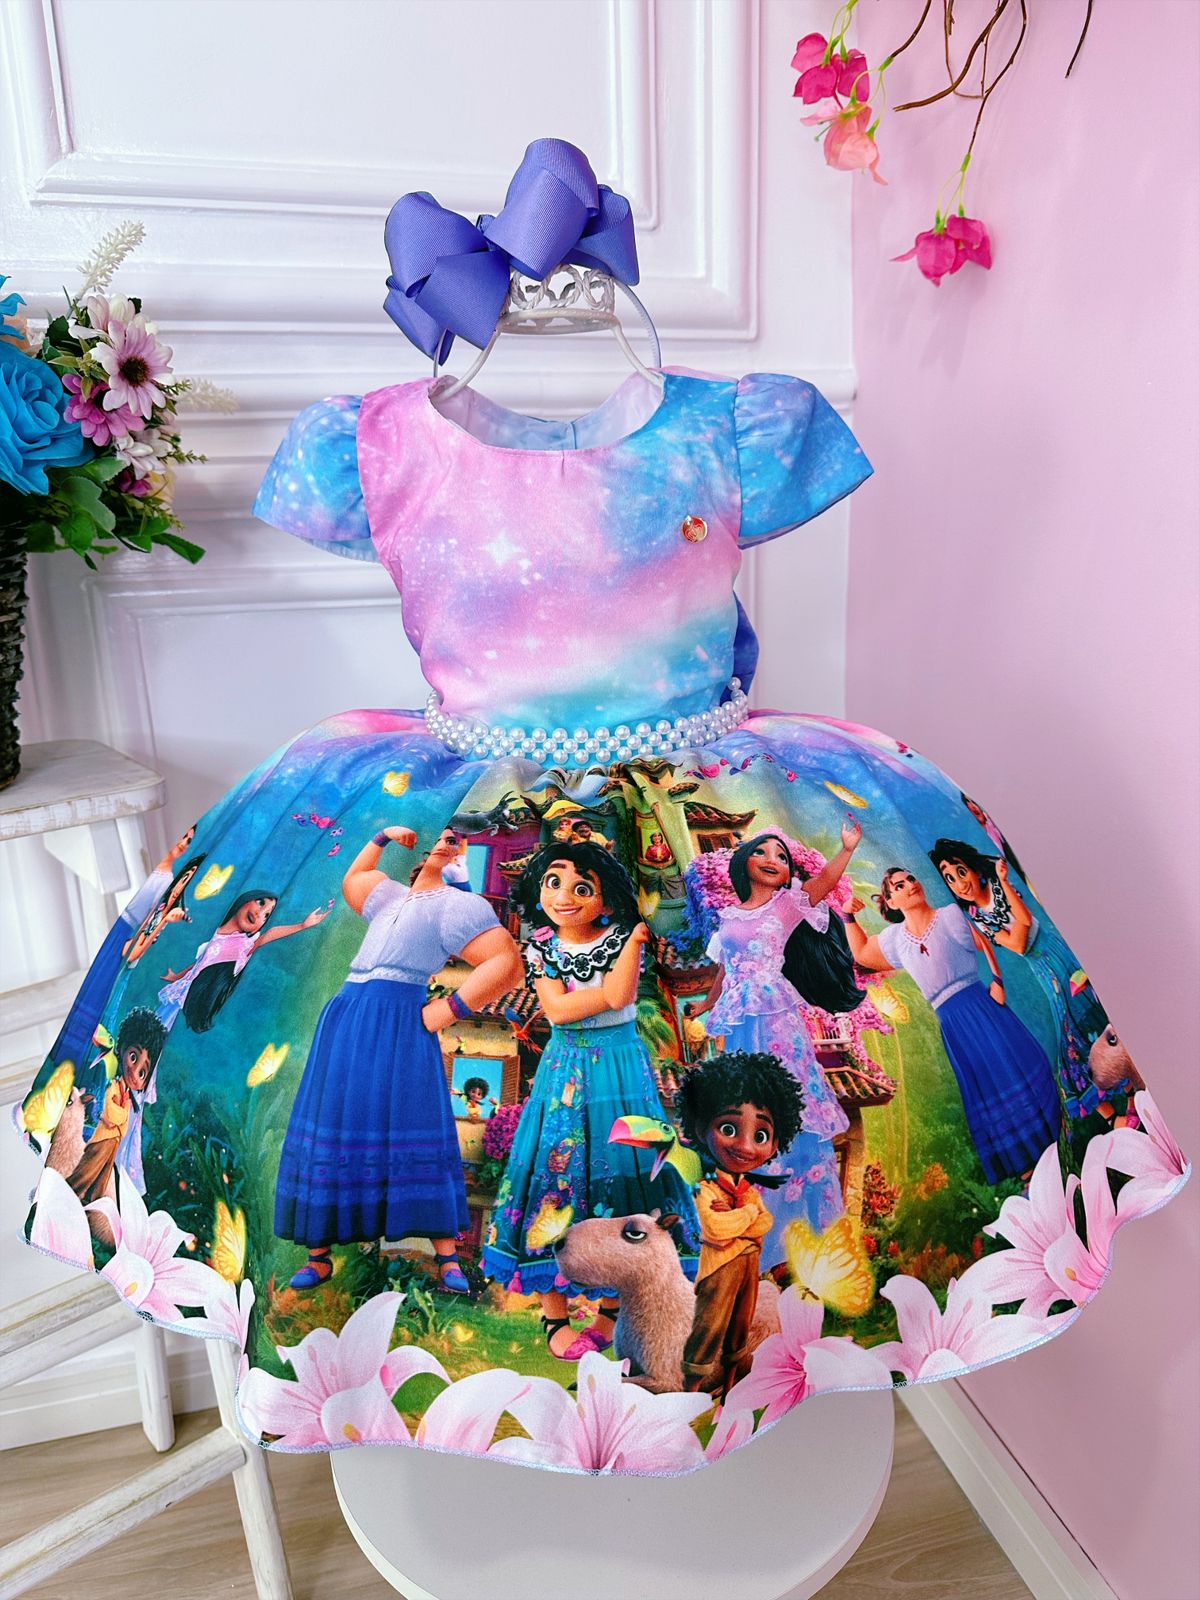 Vestido Infantil Princesa Chuva de Bençãos Luxo Princesas - Fabuloso Ateliê